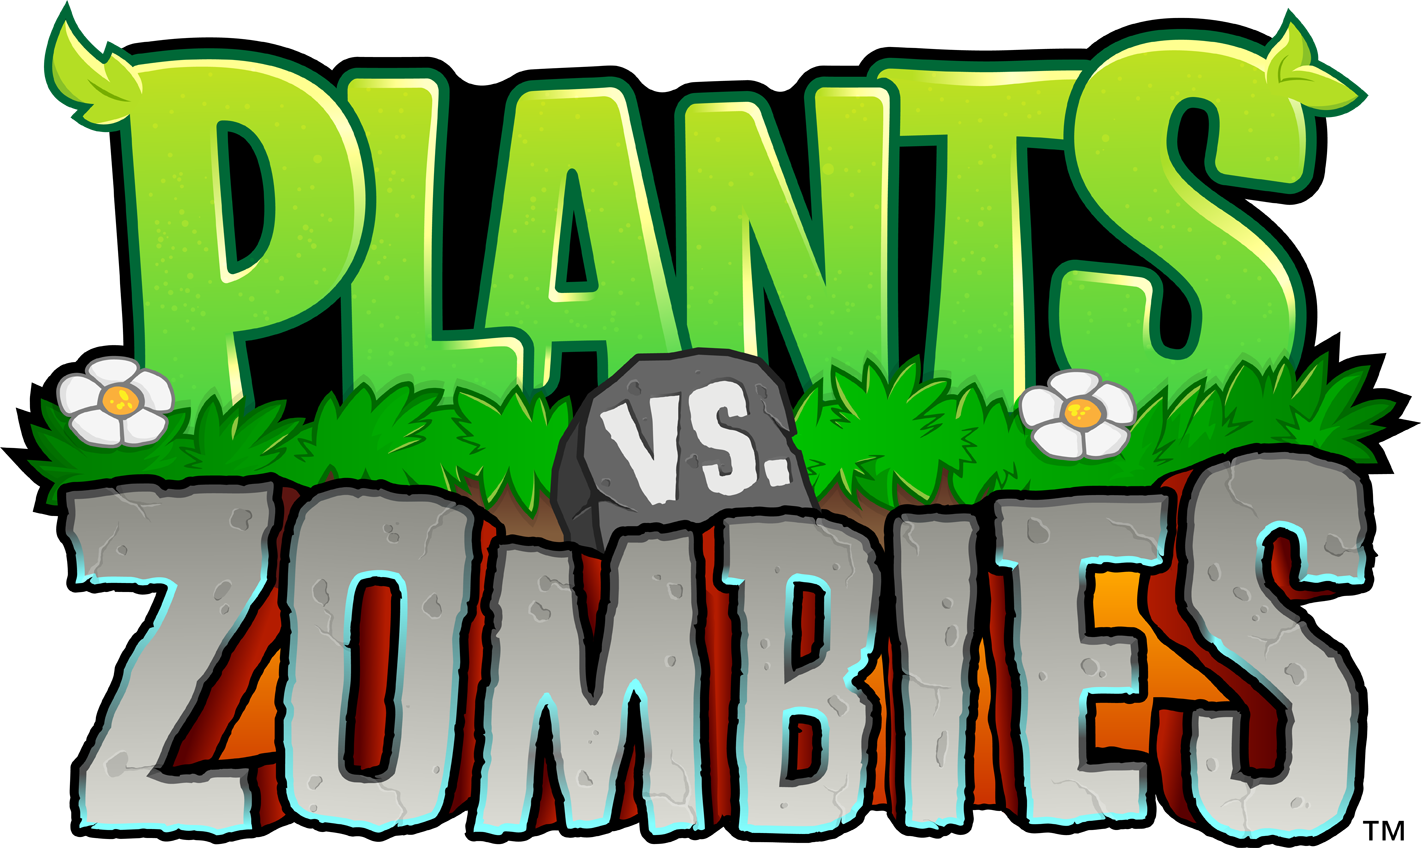 Last Stand (Plants vs. Zombies), Plants vs. Zombies Wiki